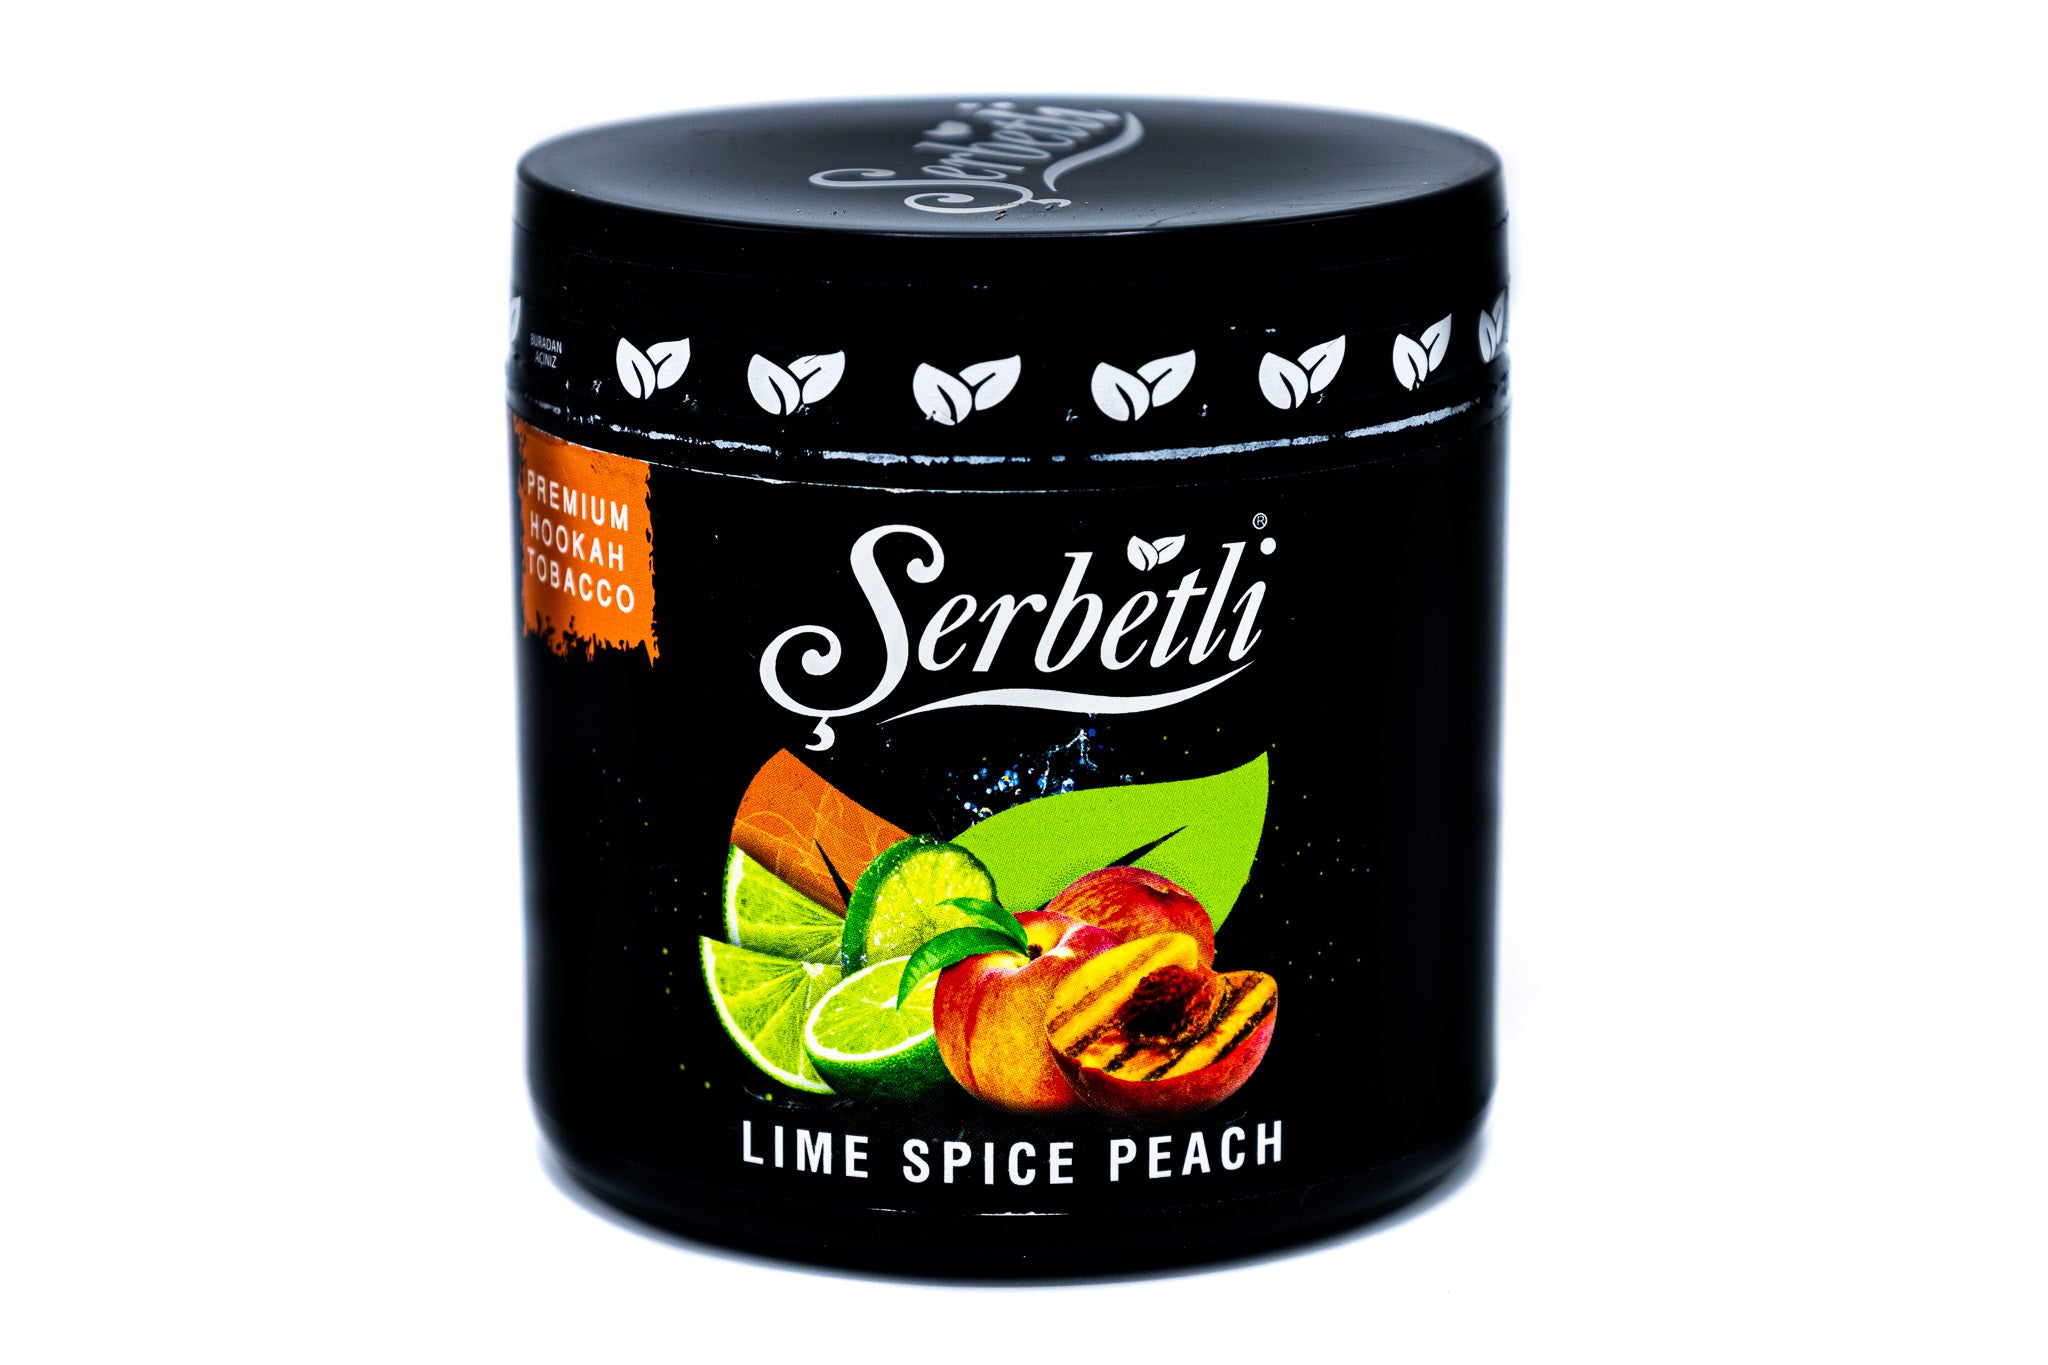 Serbetli Lime Spice Peach 250G - Smoxygen